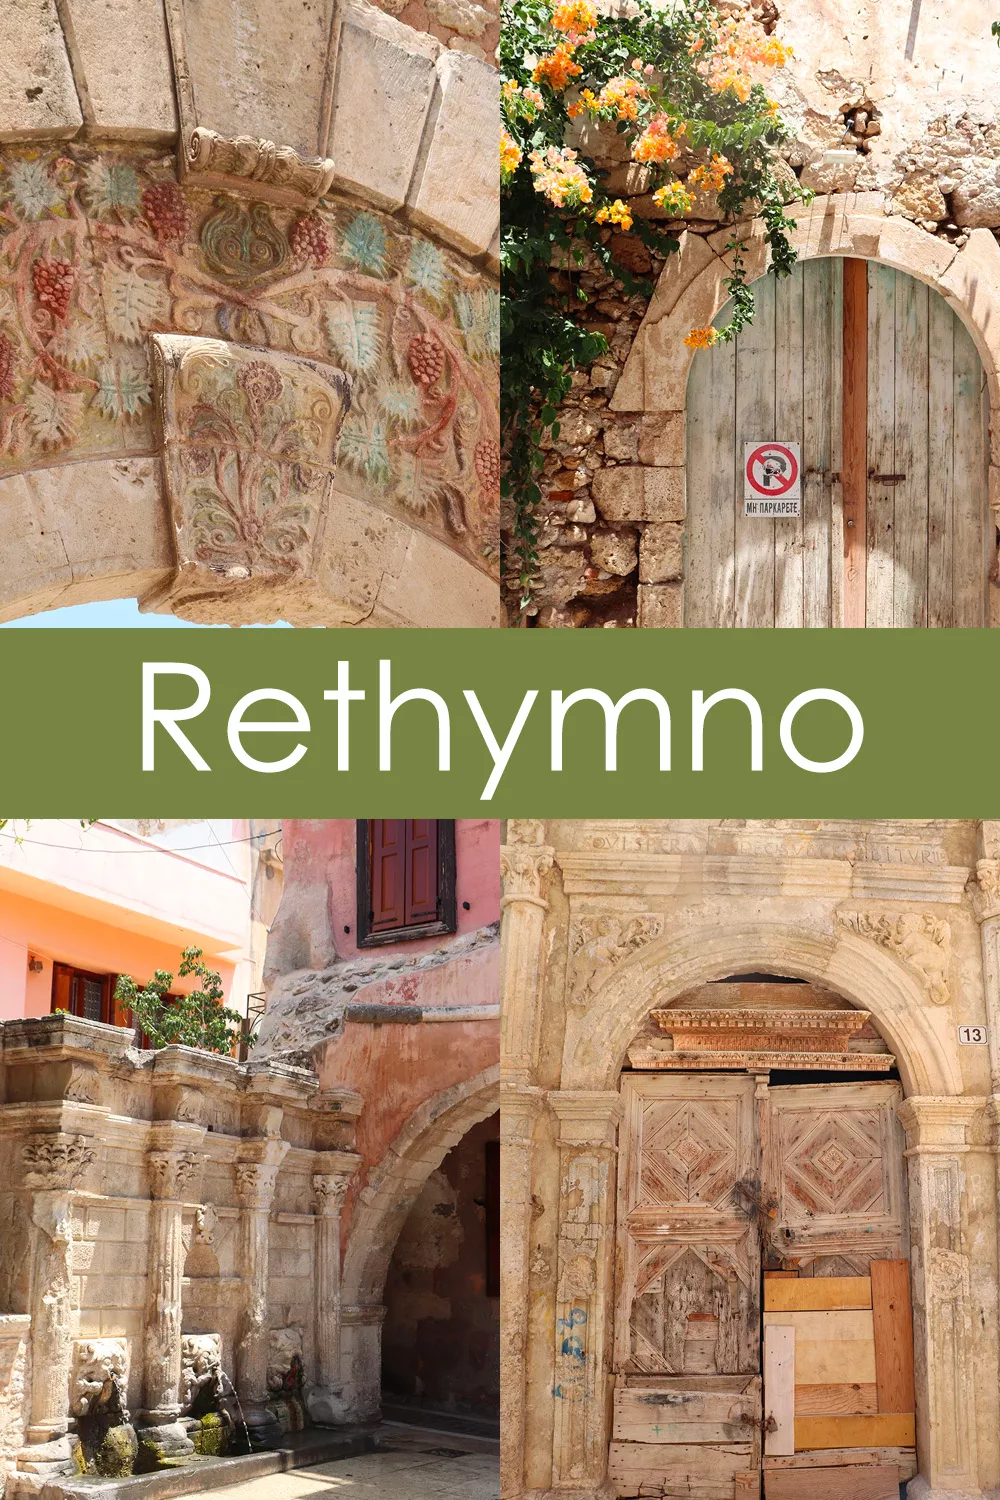 Rethymno, Crete